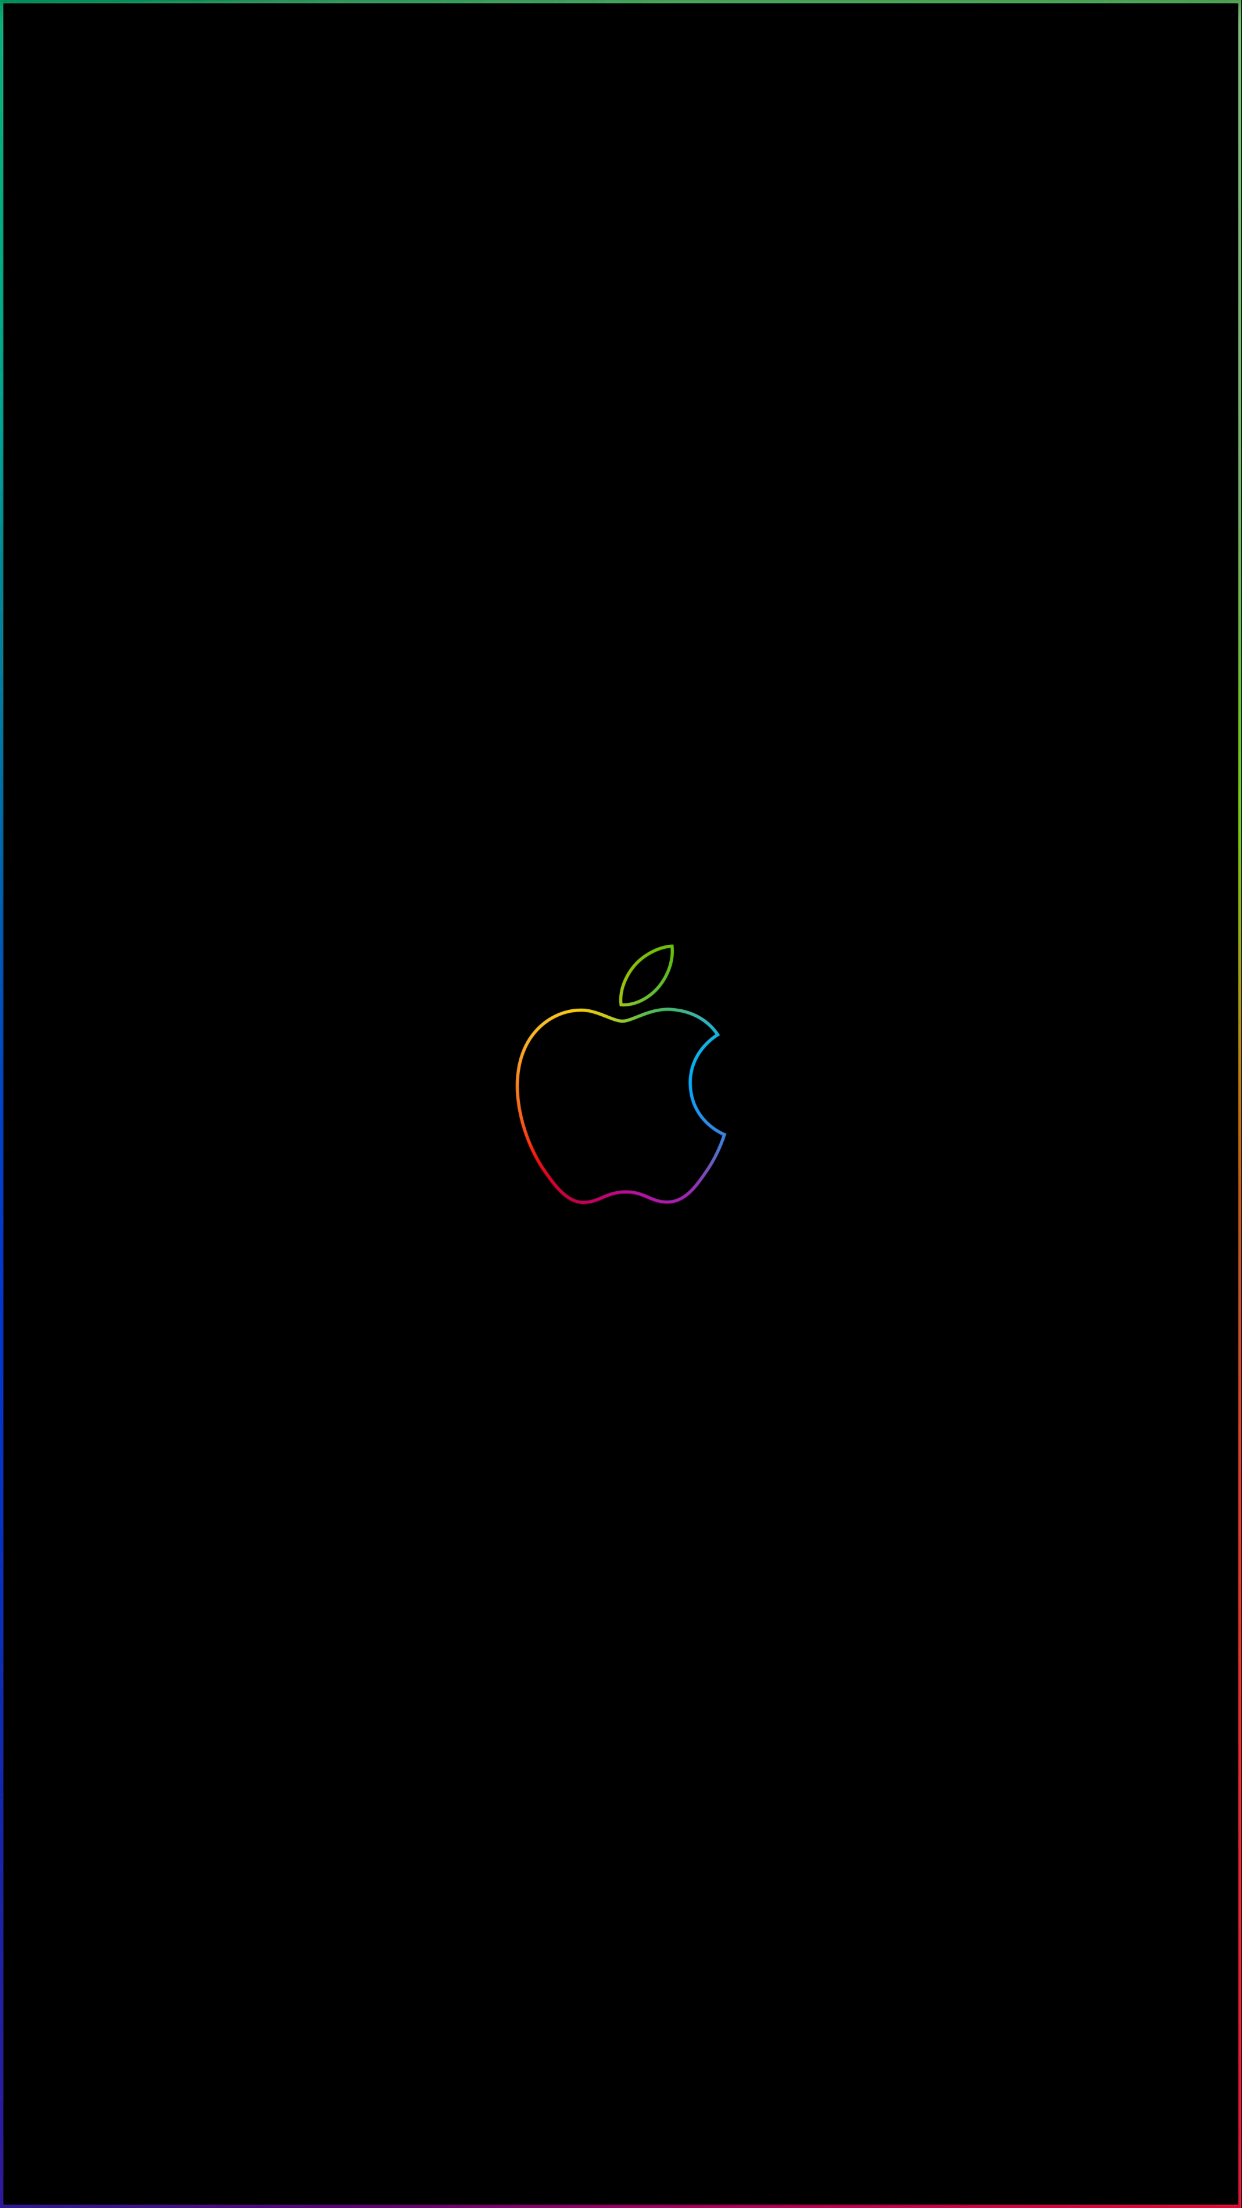 Cool Apple Logo IphoneWallpapers